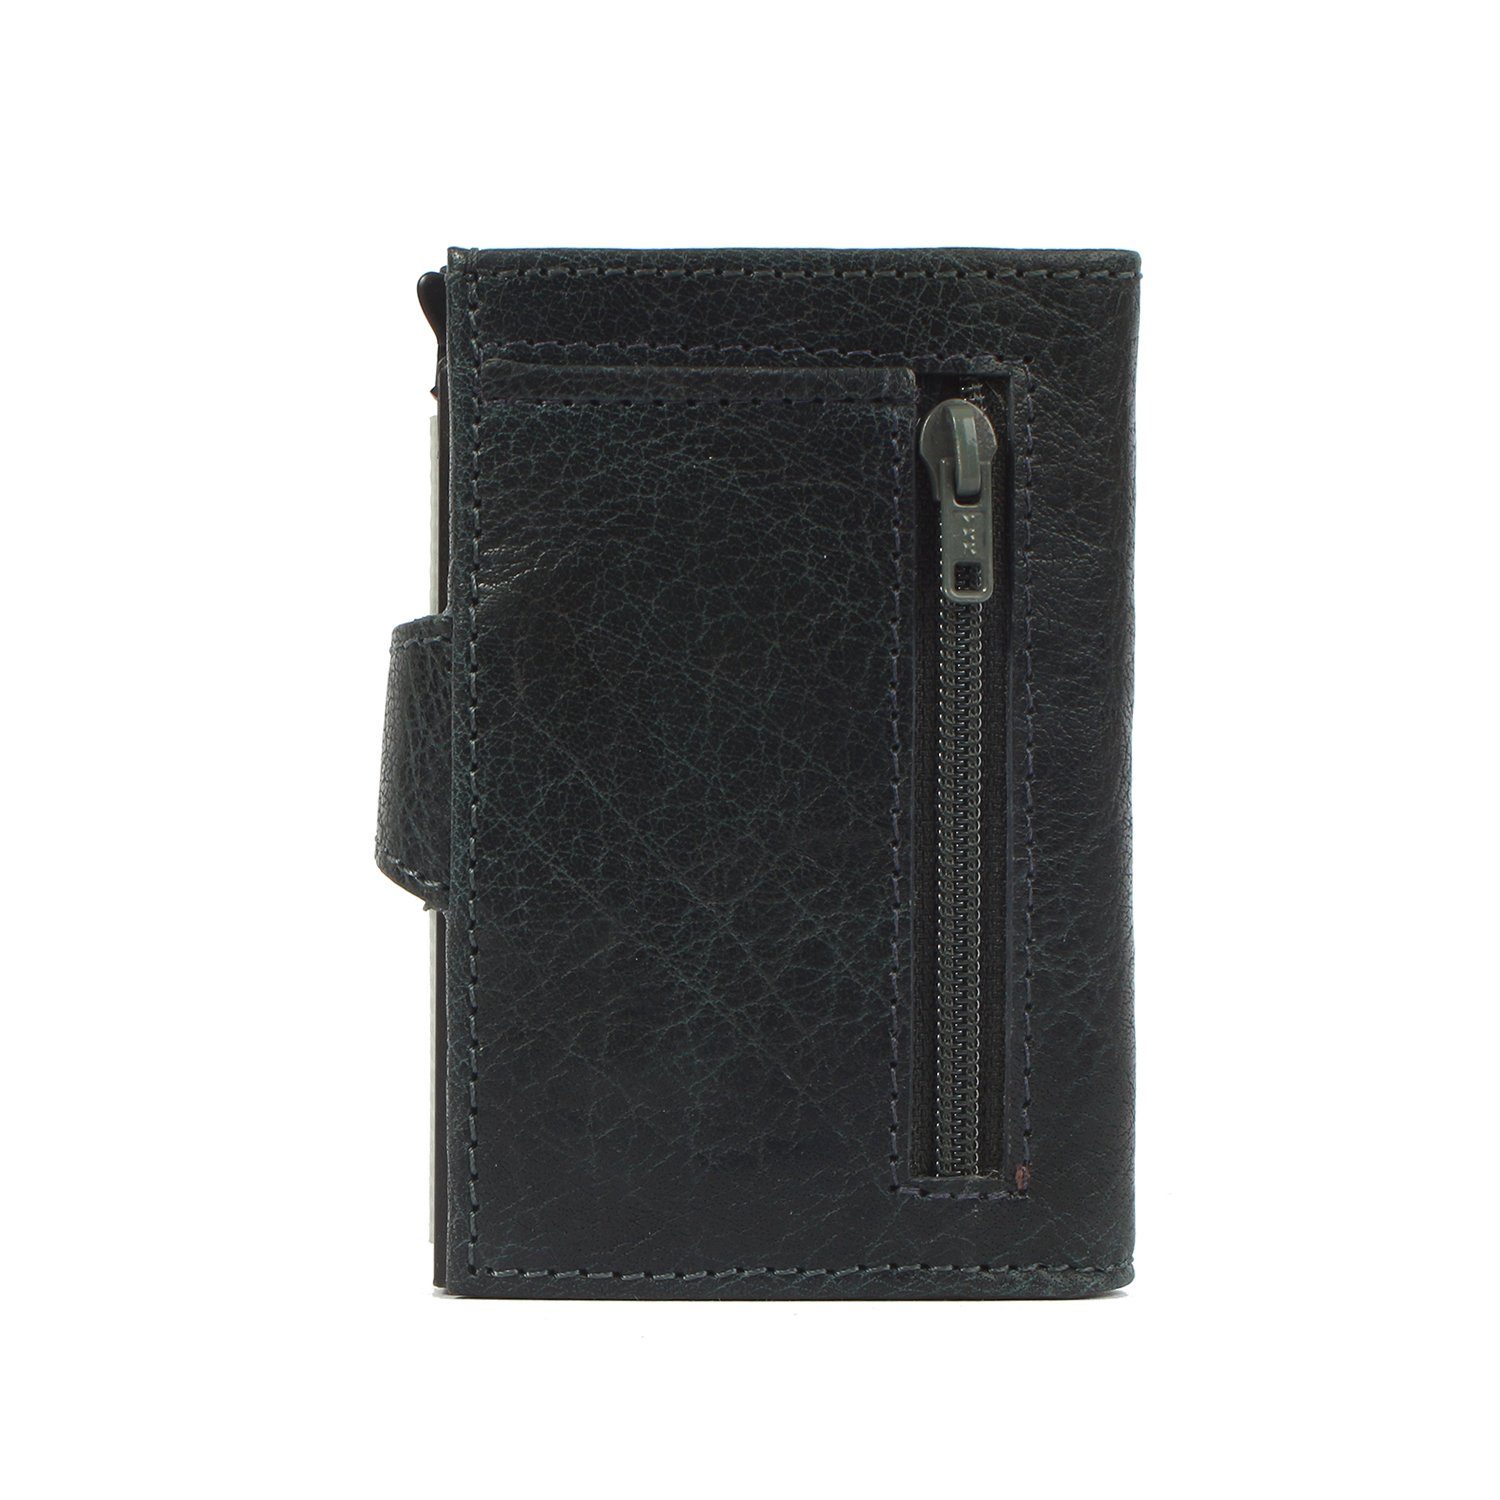 Margelisch Mini Geldbörse noonyu single Kreditkartenbörse Upcycling steelblue Leder aus leather